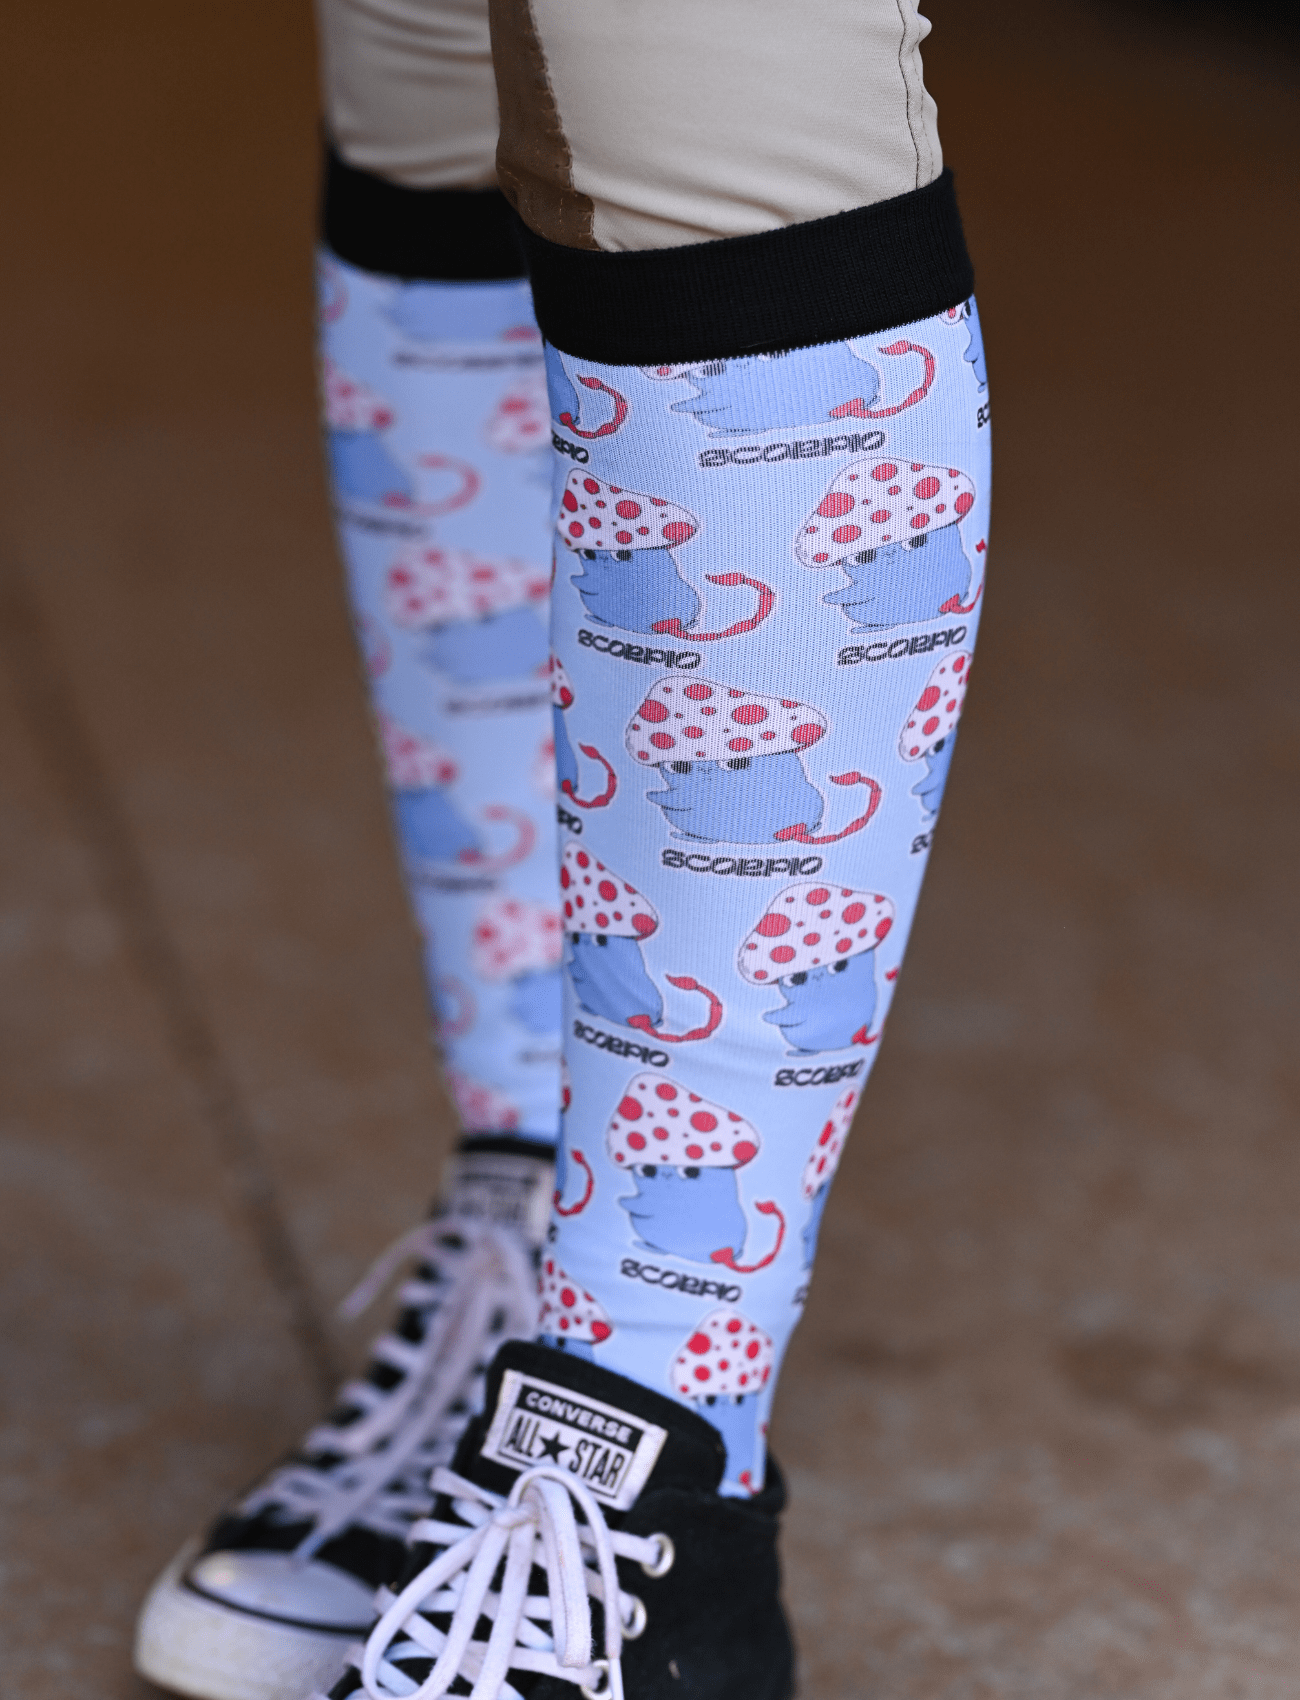 D&S LIMITED EDITION Limited Edition Limited Mushroom Scorpio Socks equestrian boot socks boot socks thin socks riding socks pattern socks tall socks funny socks knee high socks horse socks horse show socks